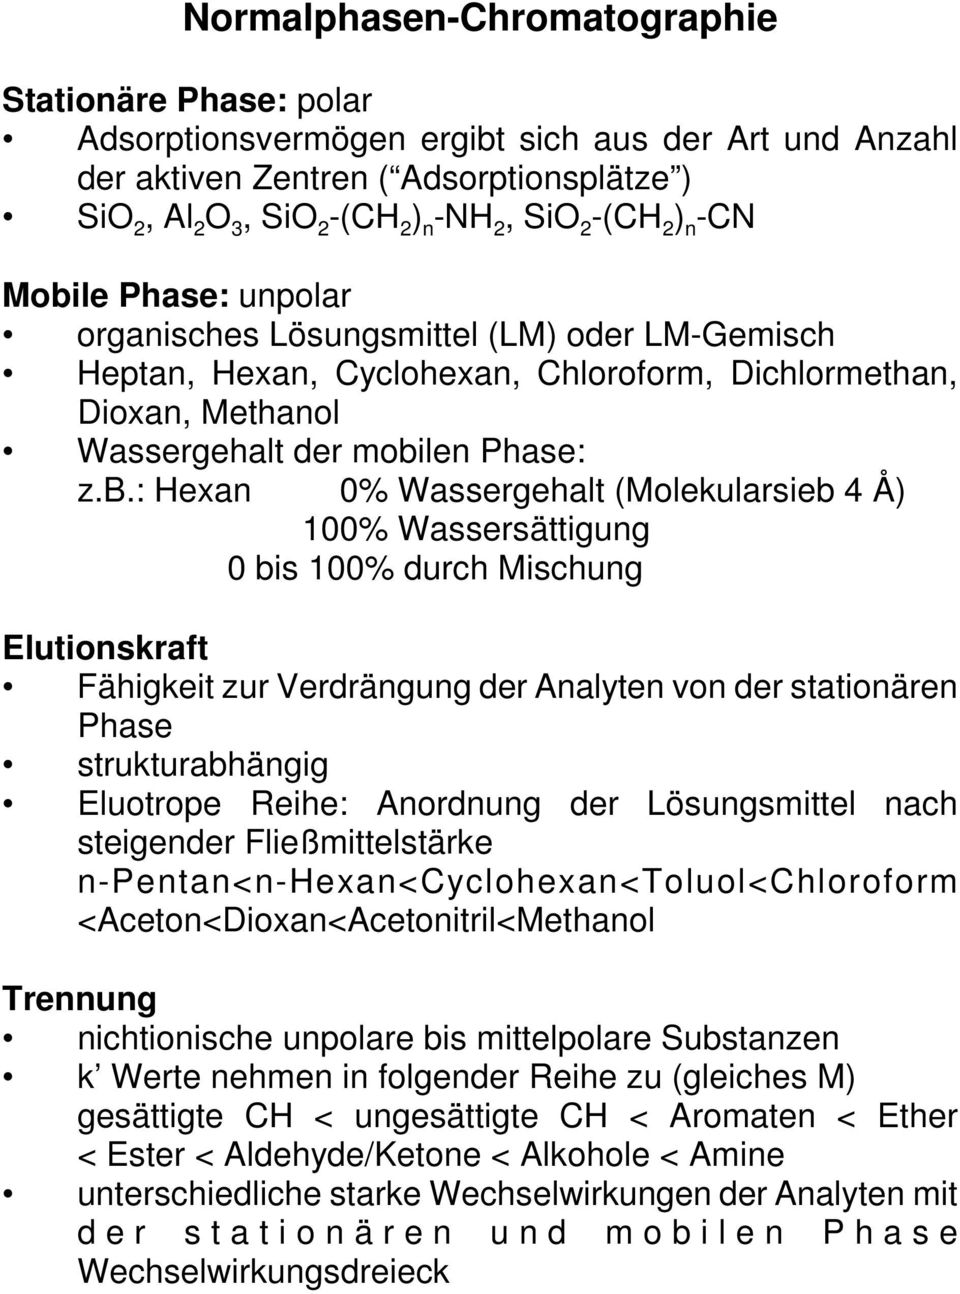 le Phase: unpolar organisches Lösungsmittel (LM) oder LM-Gemisch Heptan, Hexan, Cyclohexan, Chloroform, Dichlormethan, Dioxan, Methanol Wassergehalt der mobi